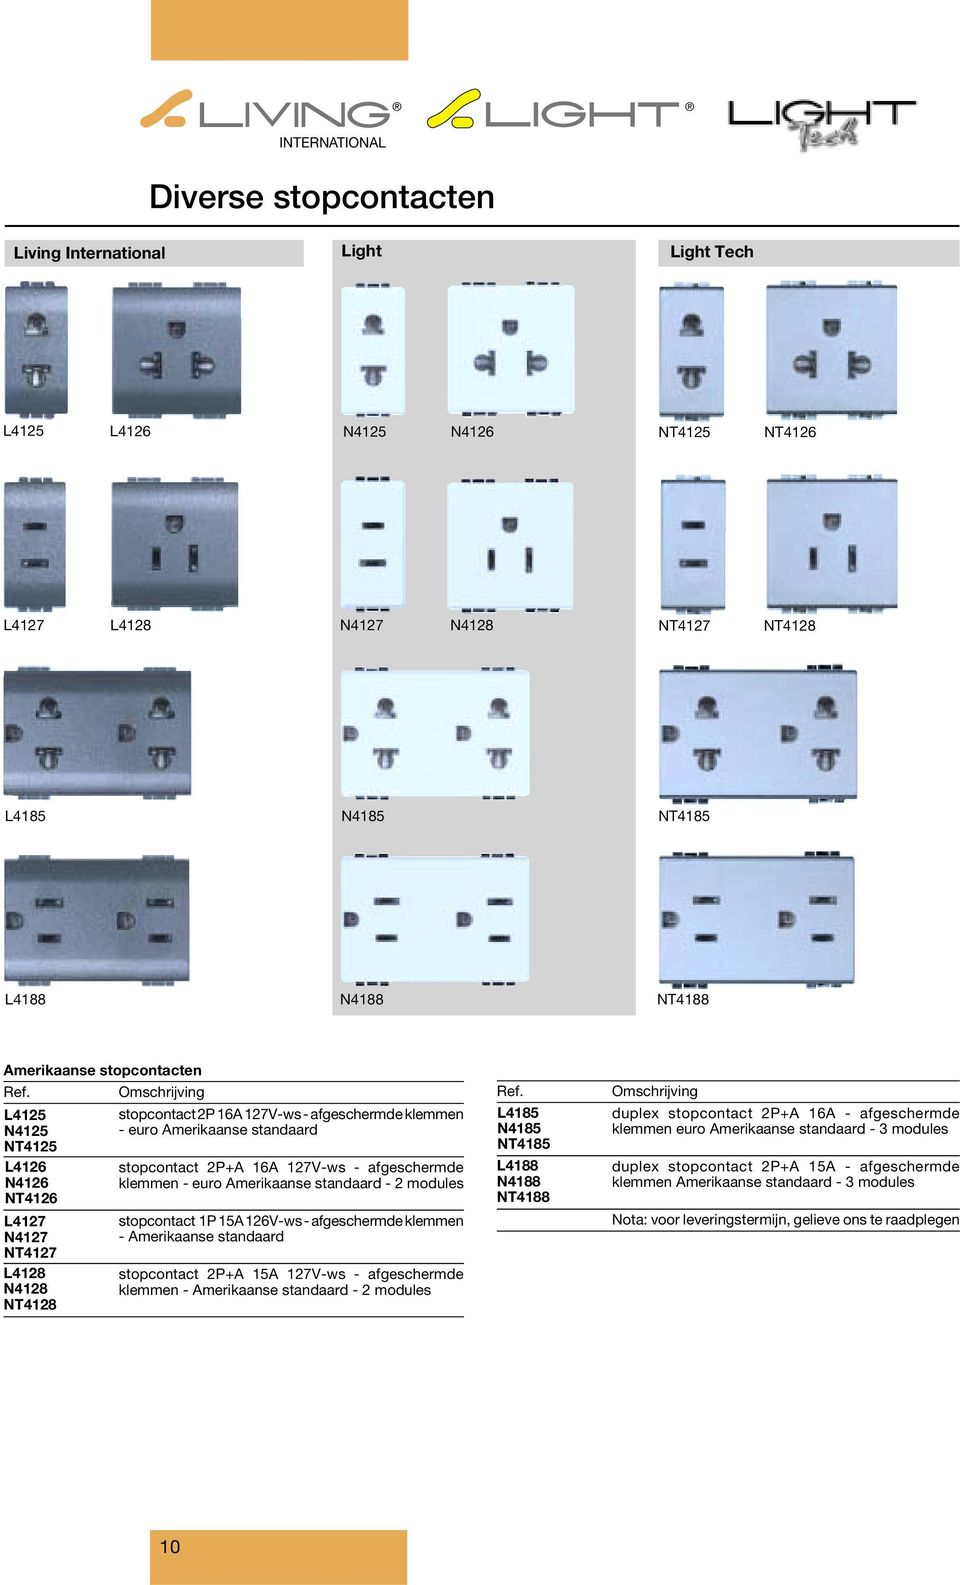 Amerikaanse standaard - 2 modules stopcontact 1P 15A 126V-ws - afgeschermde klemmen - Amerikaanse standaard stopcontact 2P+A 15A 127V-ws - afgeschermde klemmen - Amerikaanse standaard - 2 modules